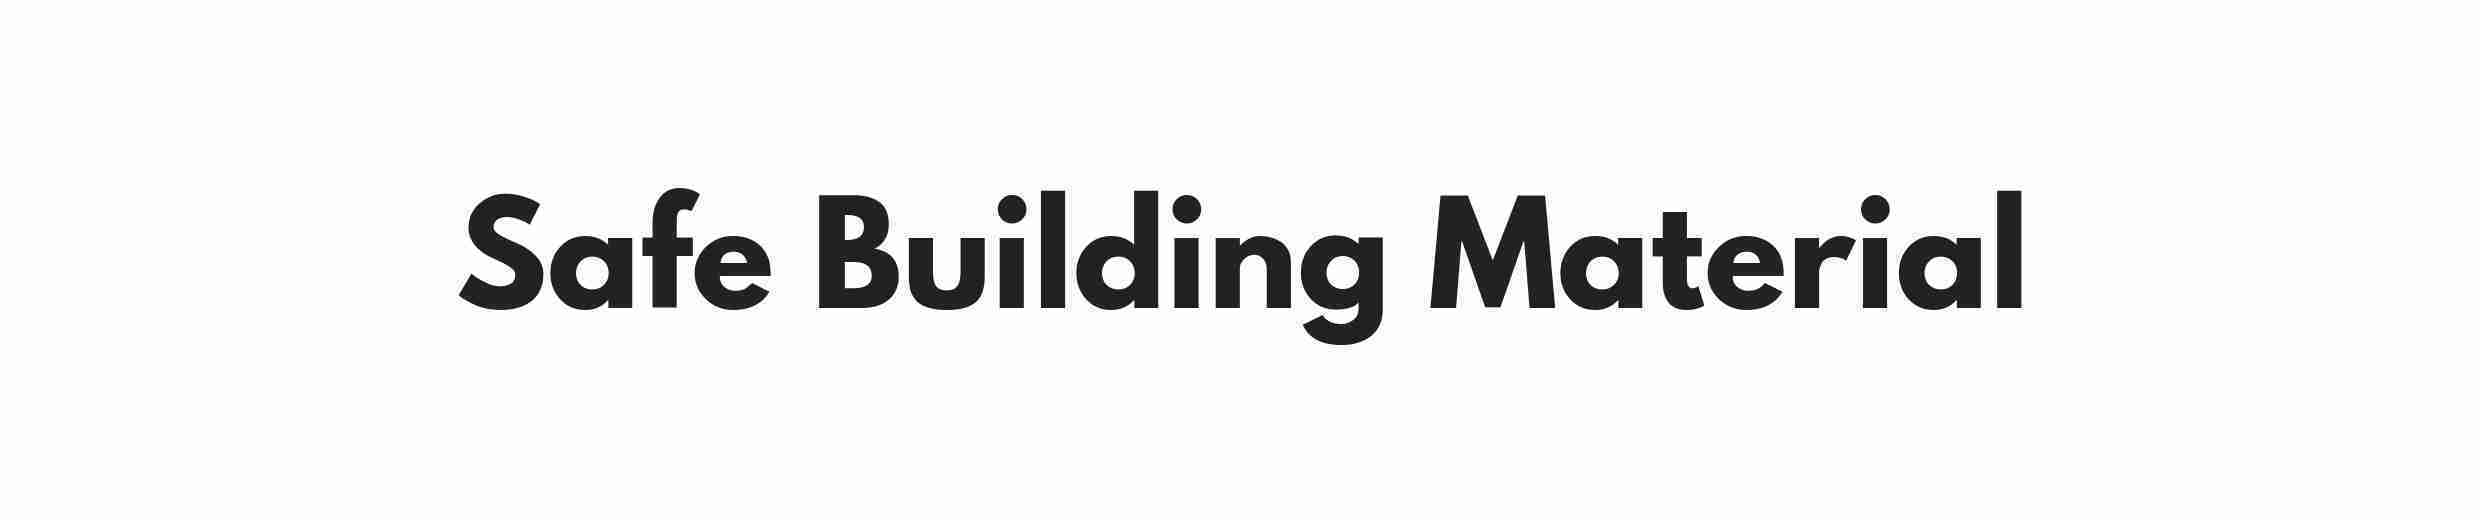 Safe Building Material